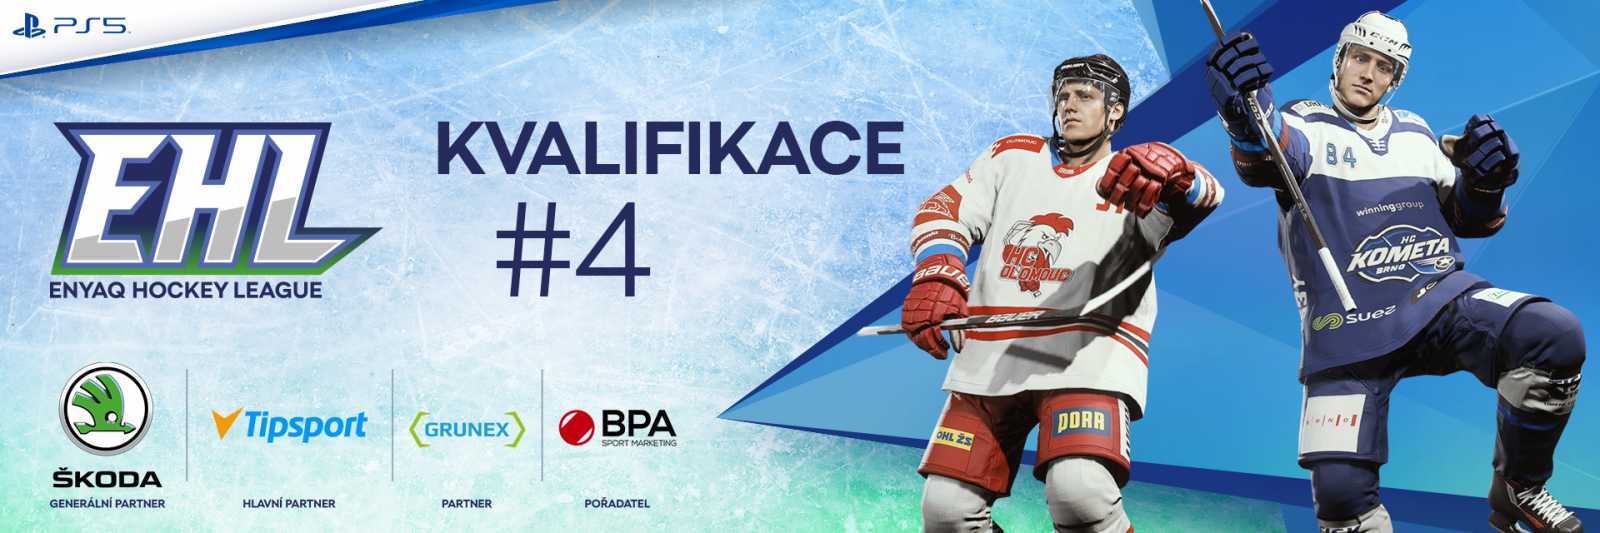 ENYAQ Hockey League | Kvalifikace #4